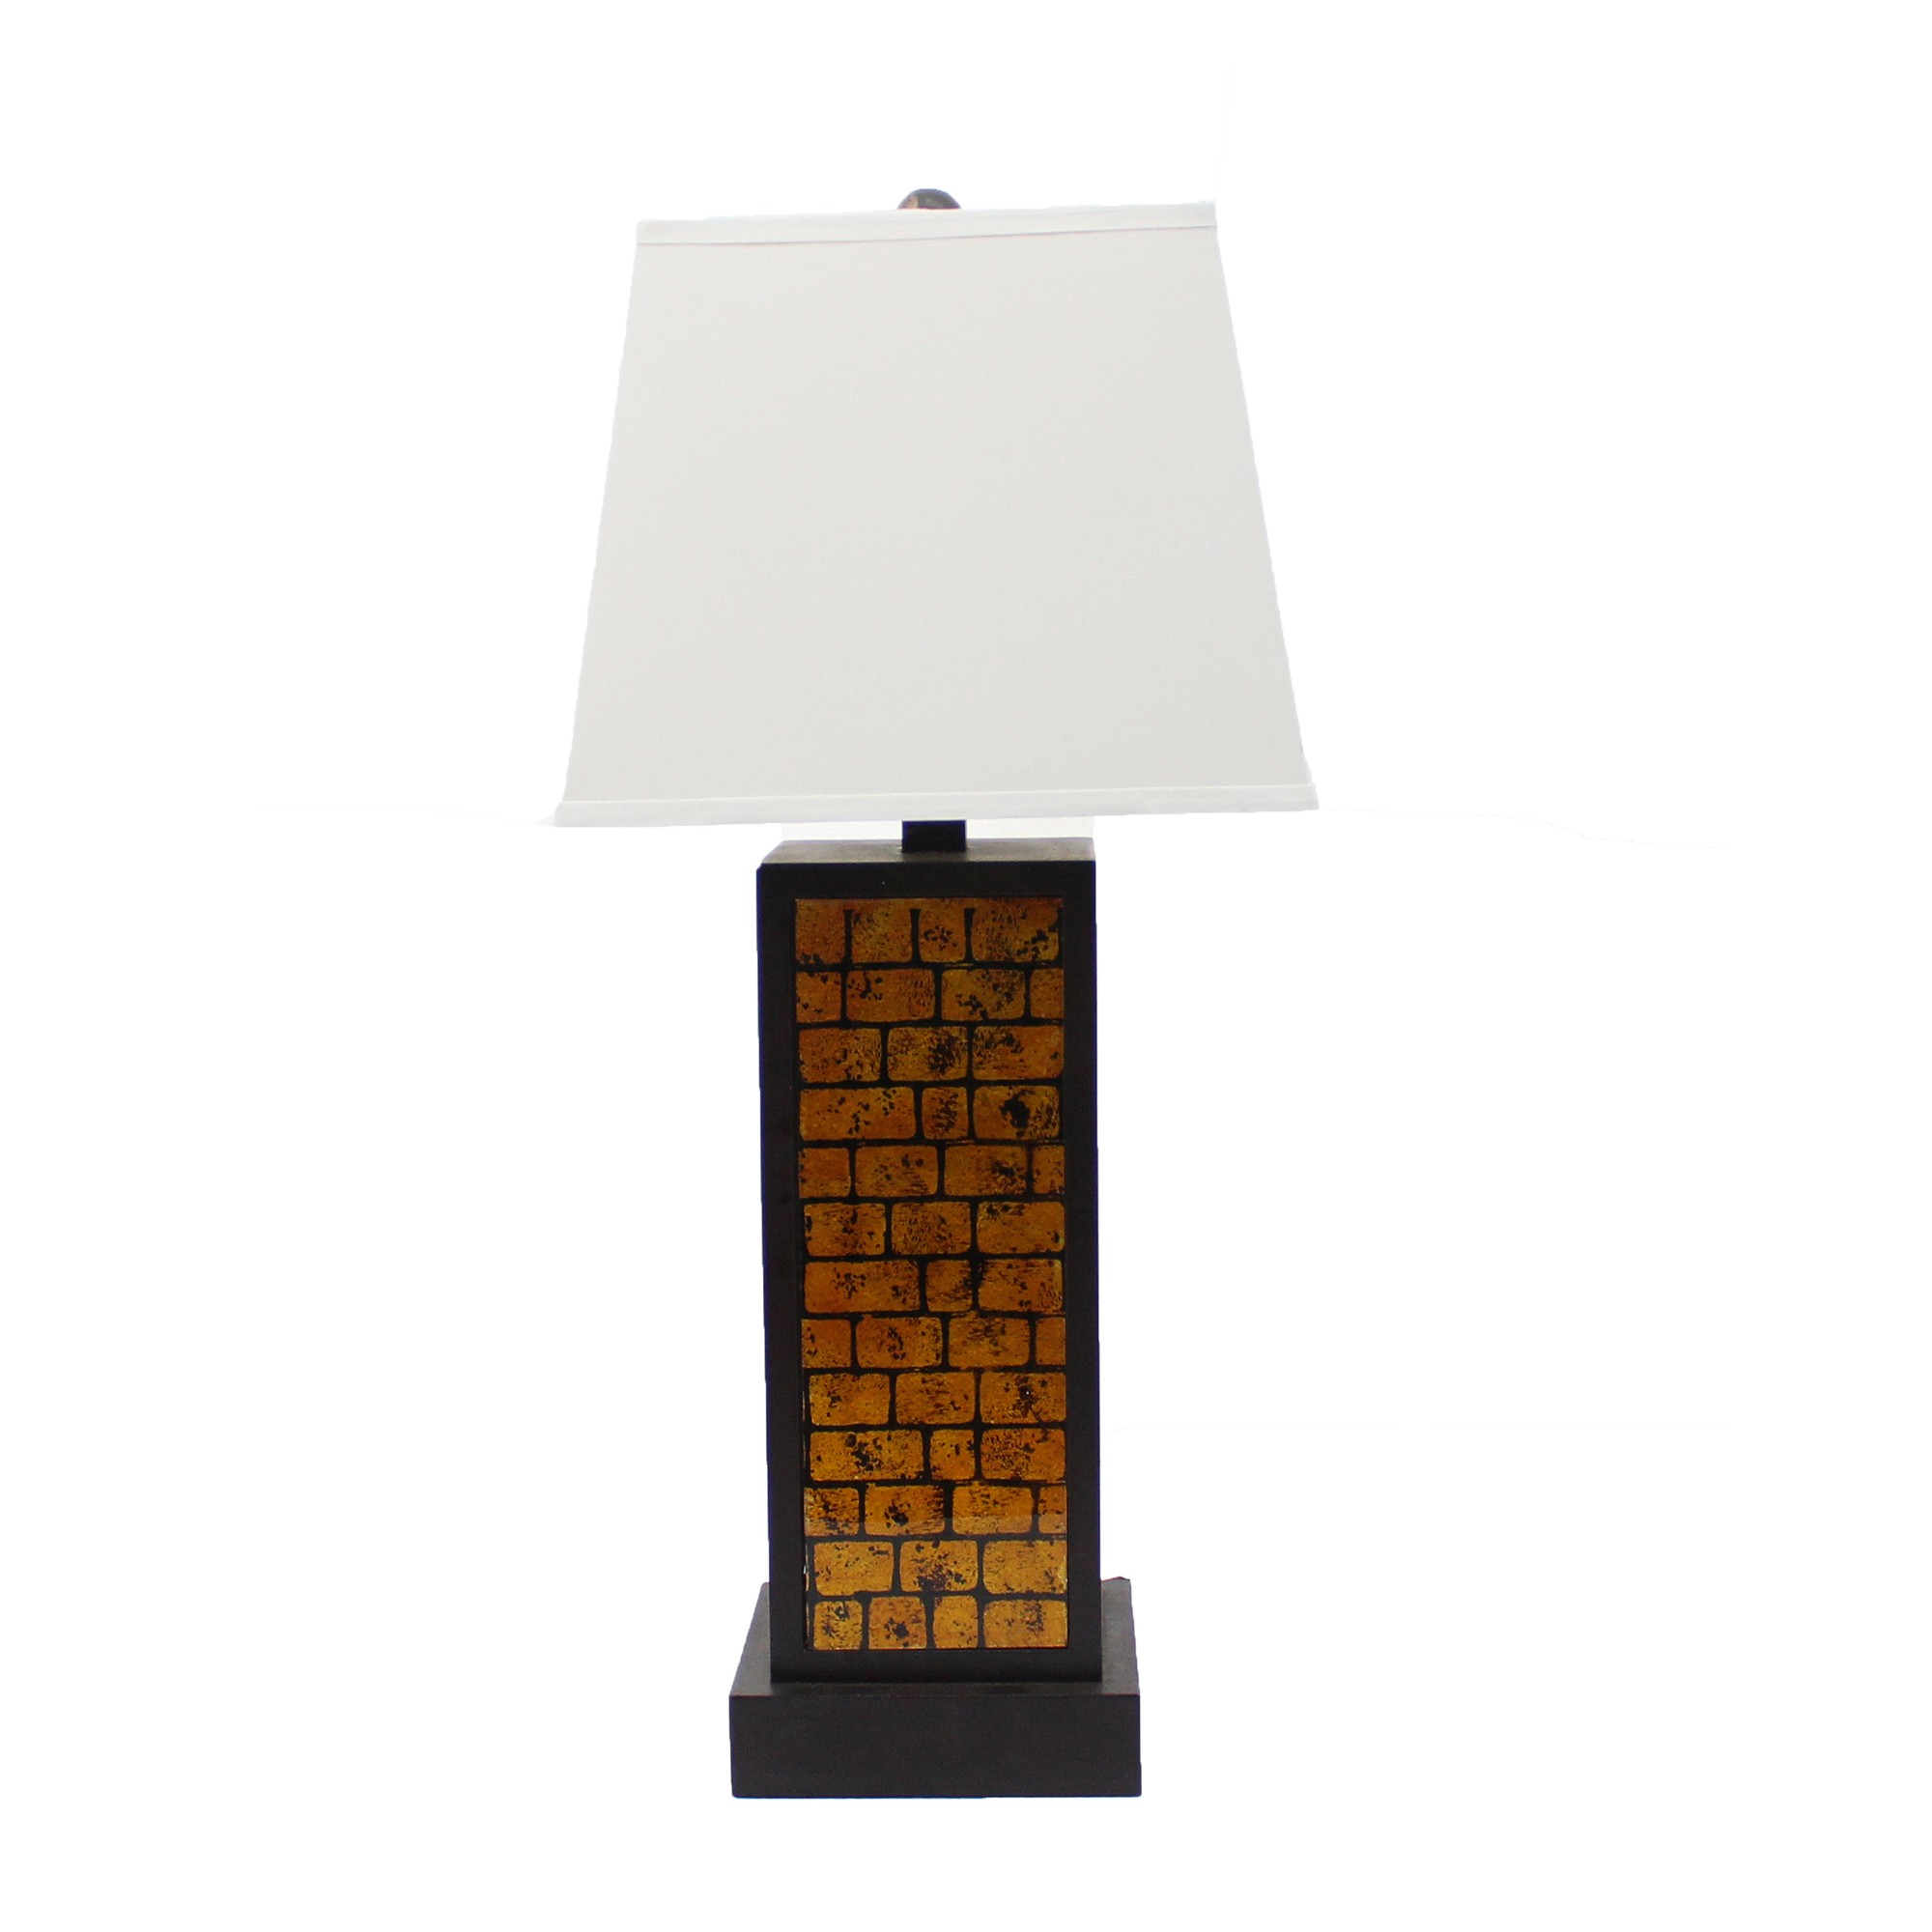 13" x 15" x 30.75" Black, Metal With Yellow Brick Pattern - Table Lamp